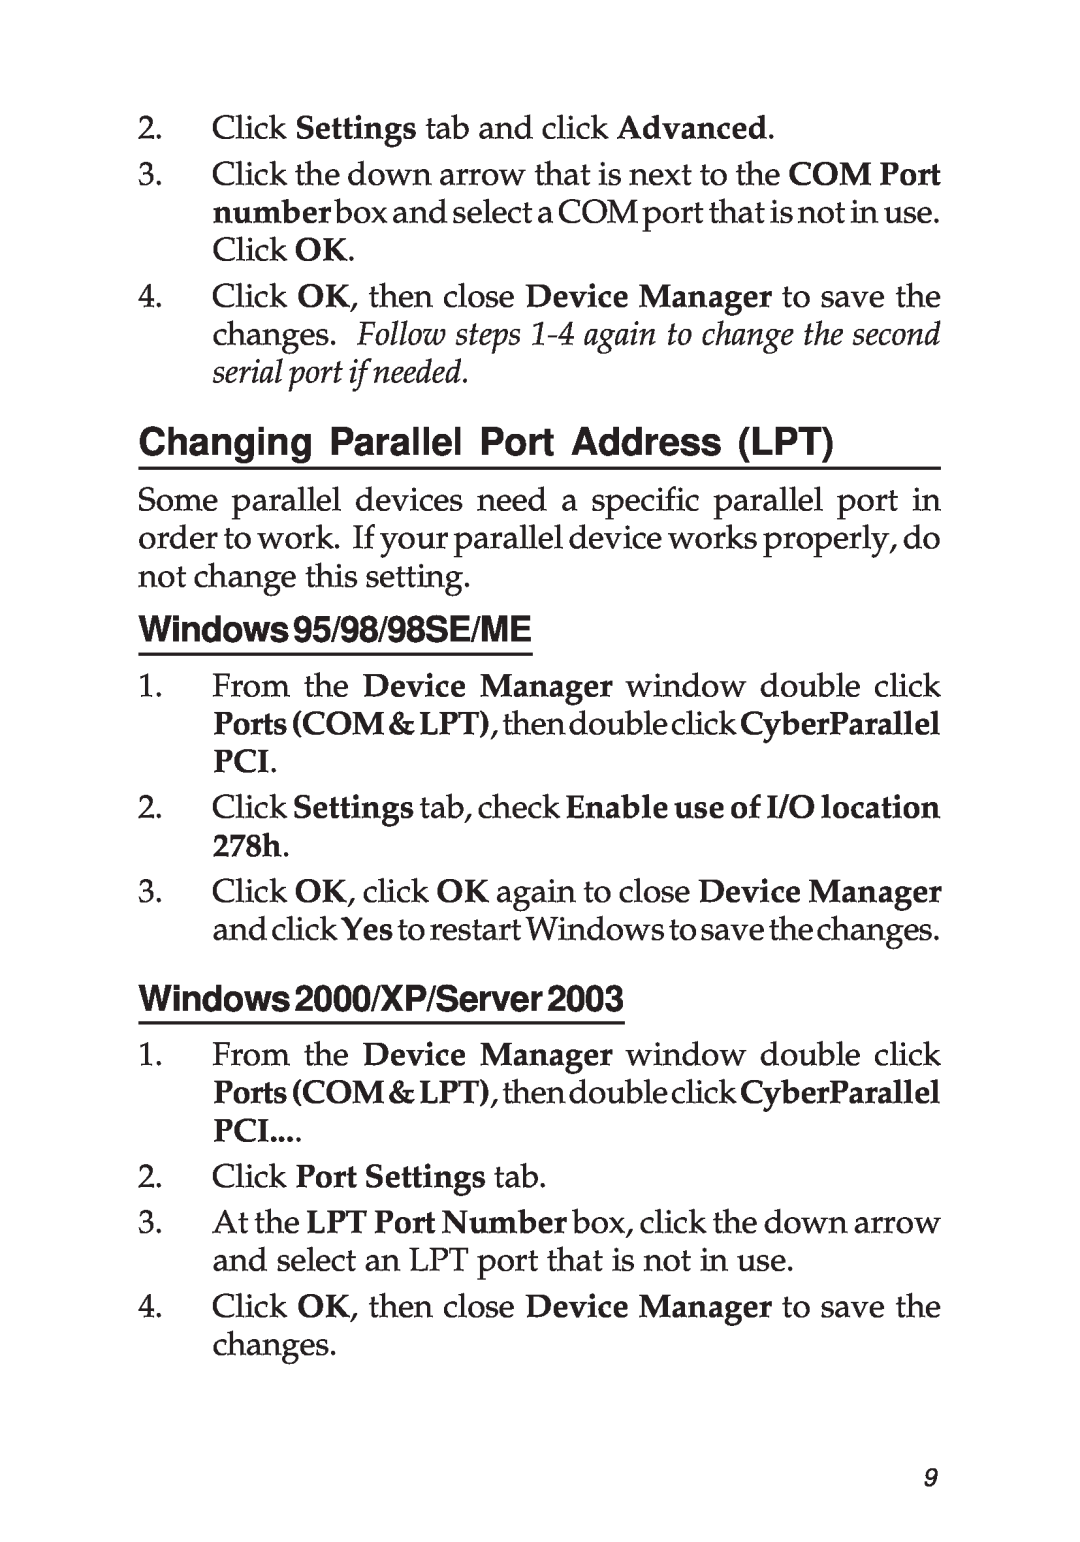 SIIG 2S1P Changing Parallel Port Address LPT, Windows95/98/98SE/ME, Windows2000/XP/Server2003, Click Port Settings tab 